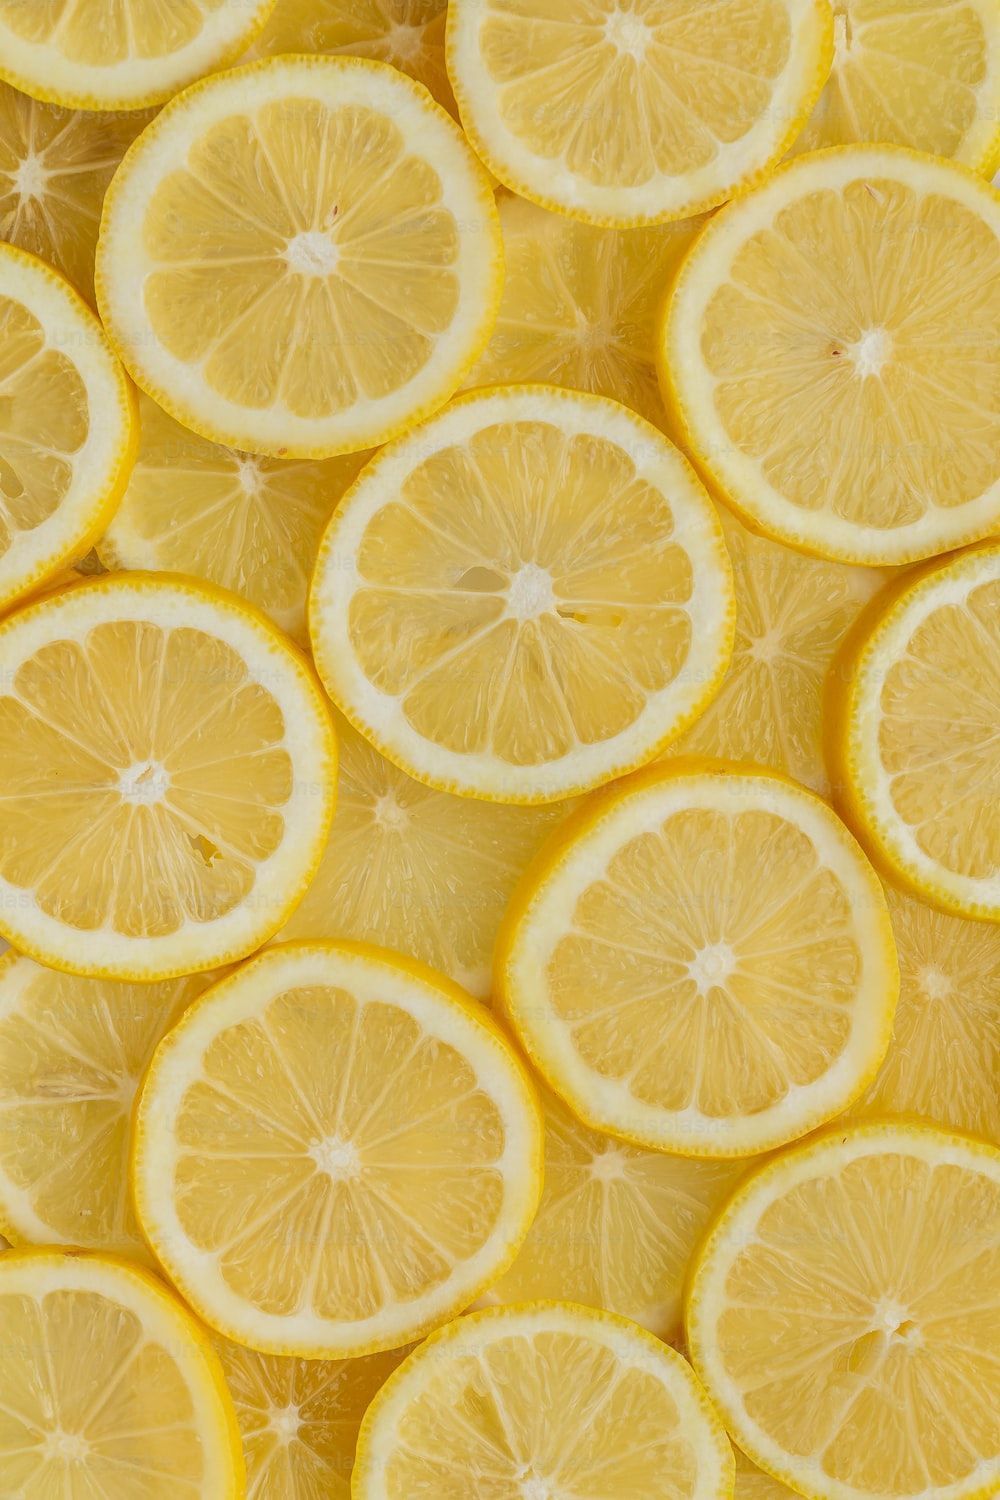 A close up of many slices from lemons - Lemon